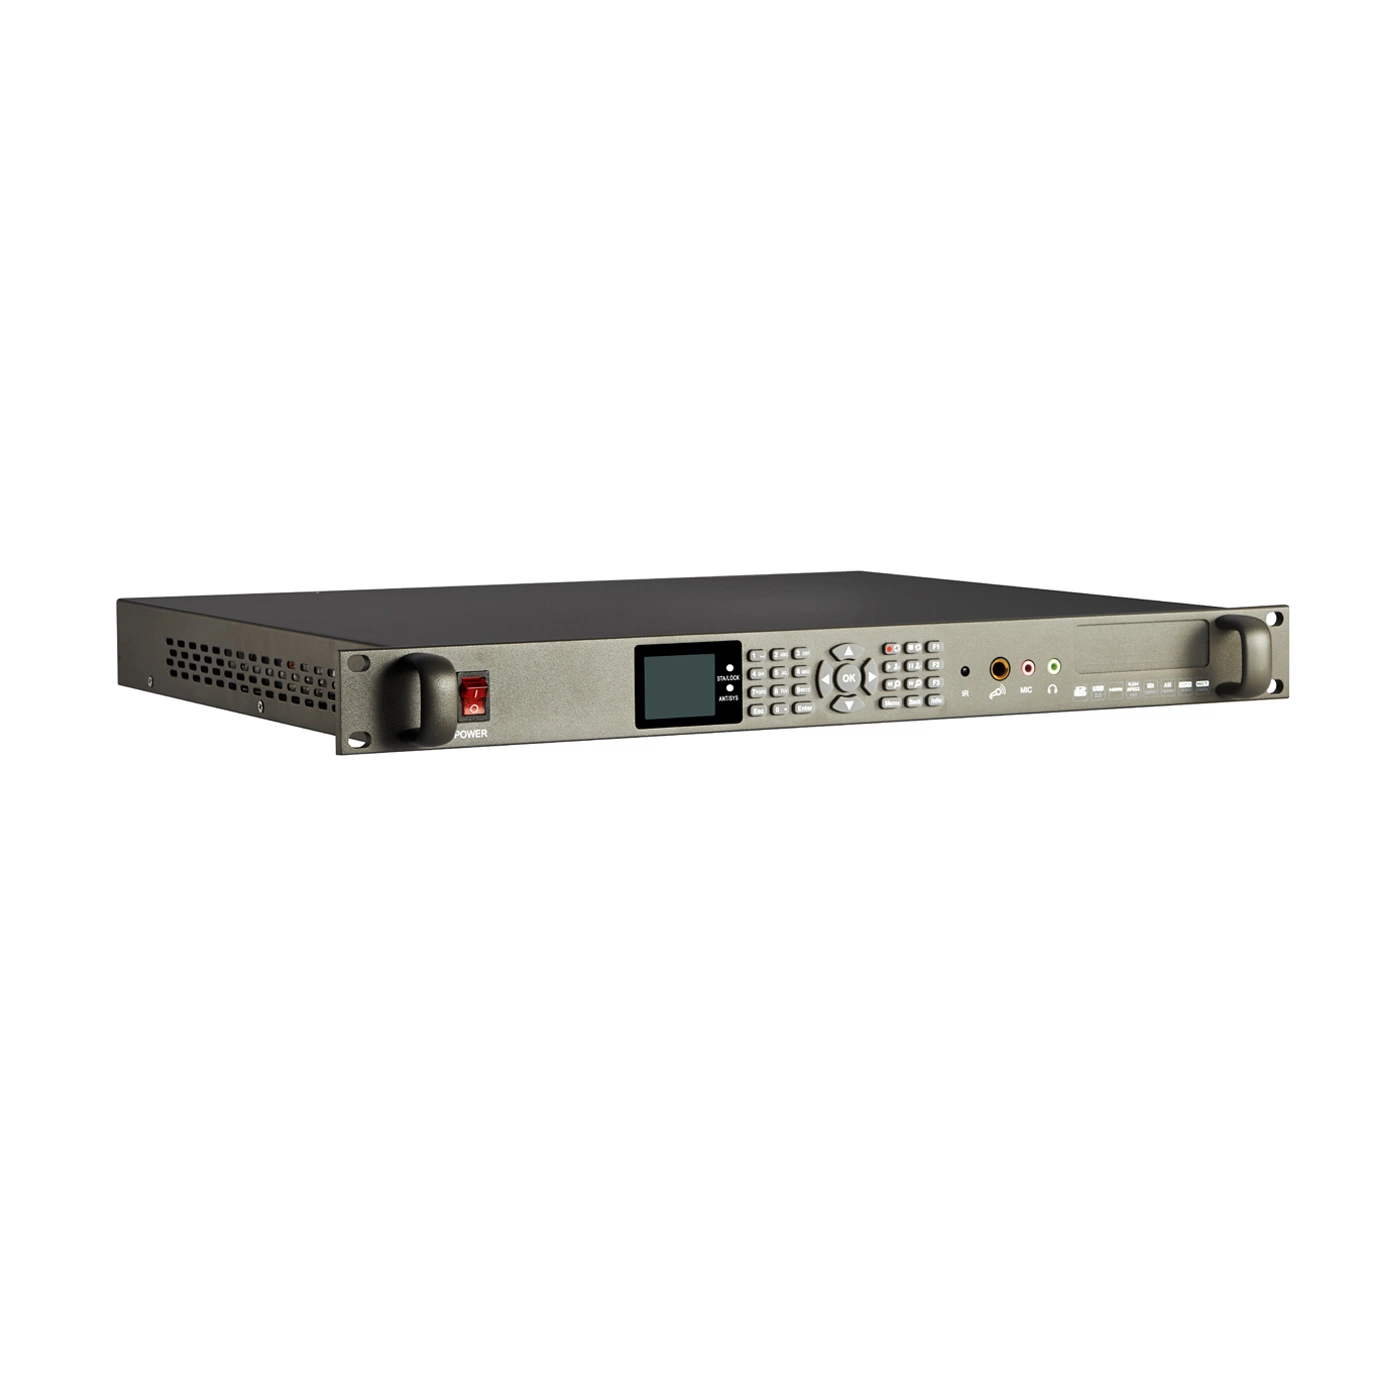 Emergency Control Cofdm Remote Video Surveillance System